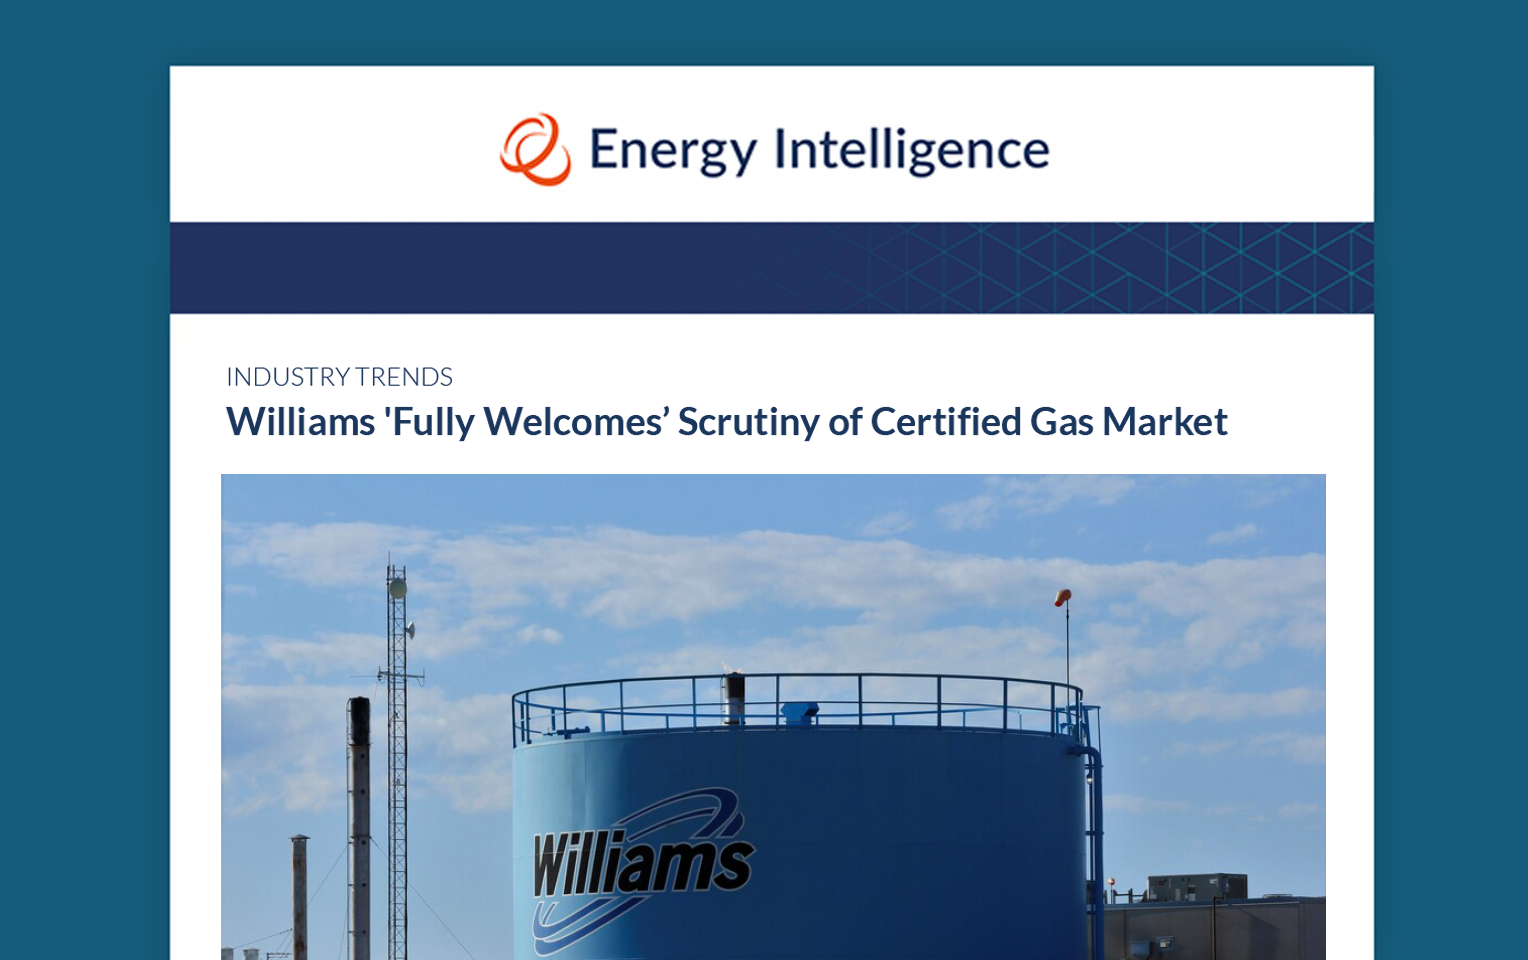 https://www.goarbo.com/press/williams-welcomes-scrutiny-of-certified-gas-market